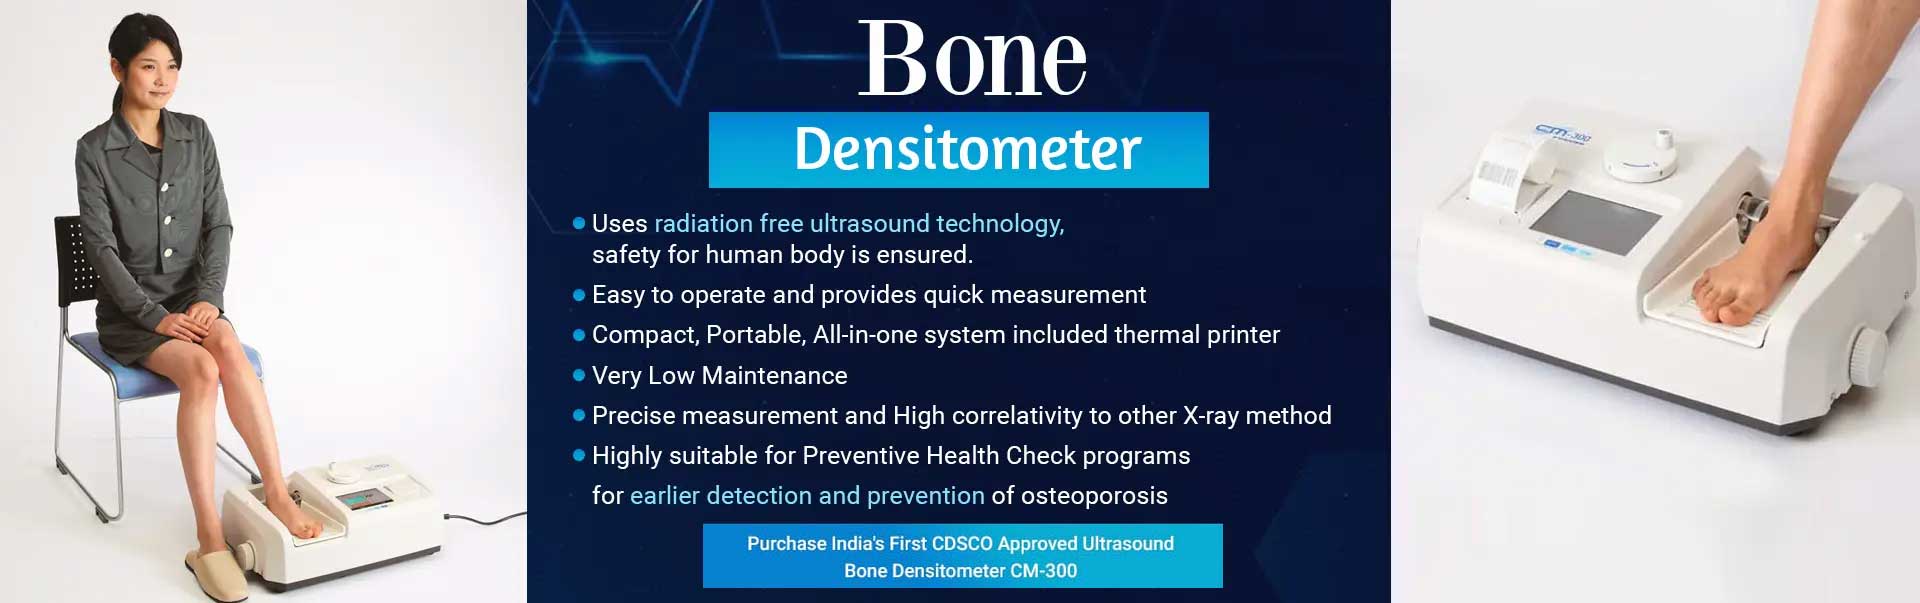 Bone Densitometer Manufacturers in Navi Mumbai